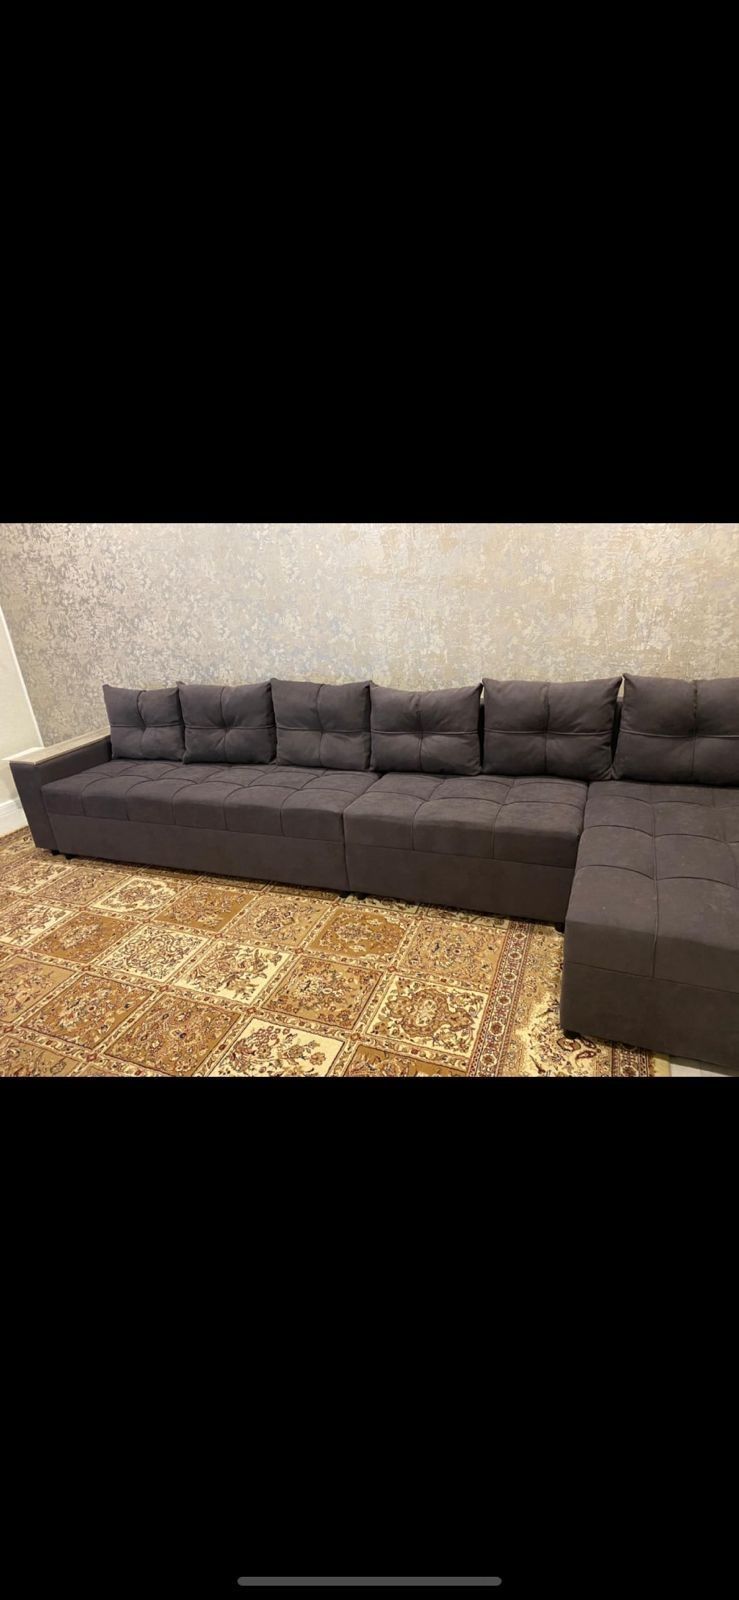 4-х метрой угловой диван MODERN Диван Мебель доставка качество Диван